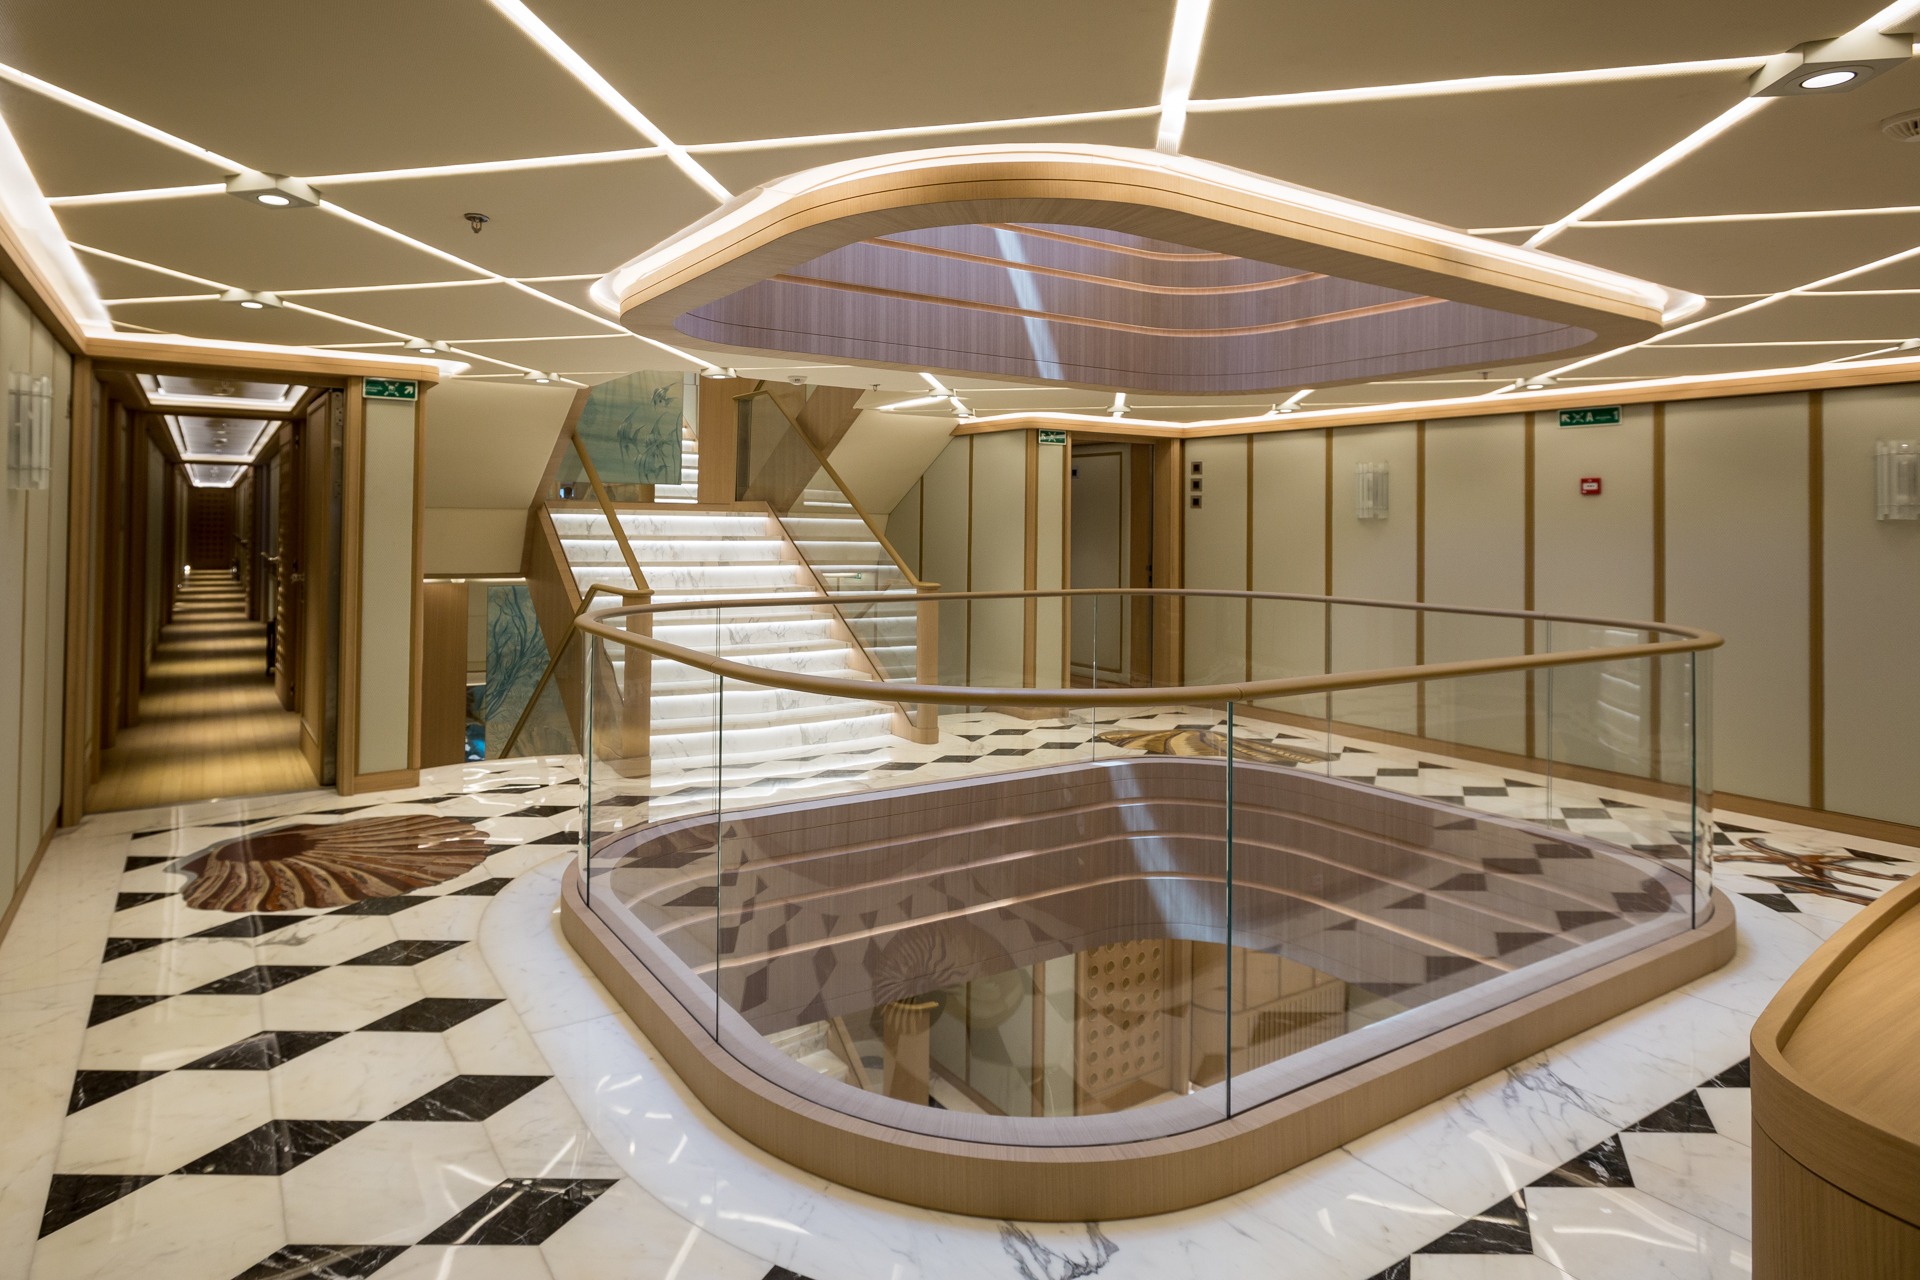 Motor Yacht Dream Central lobby & staircase